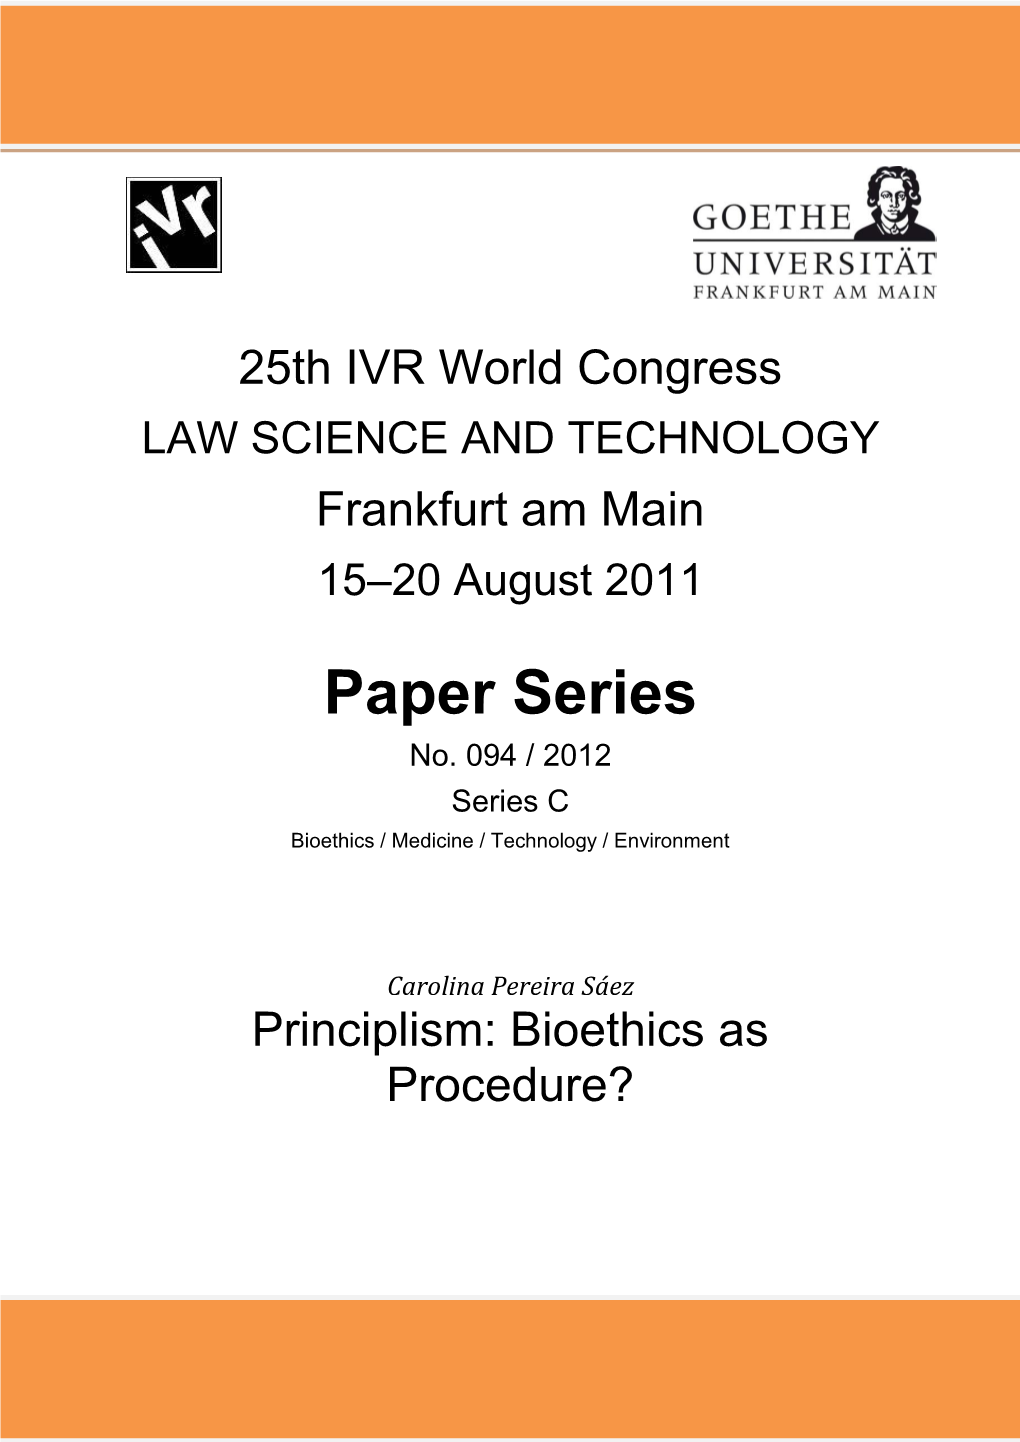 Principlism: Bioethics As Procedure?